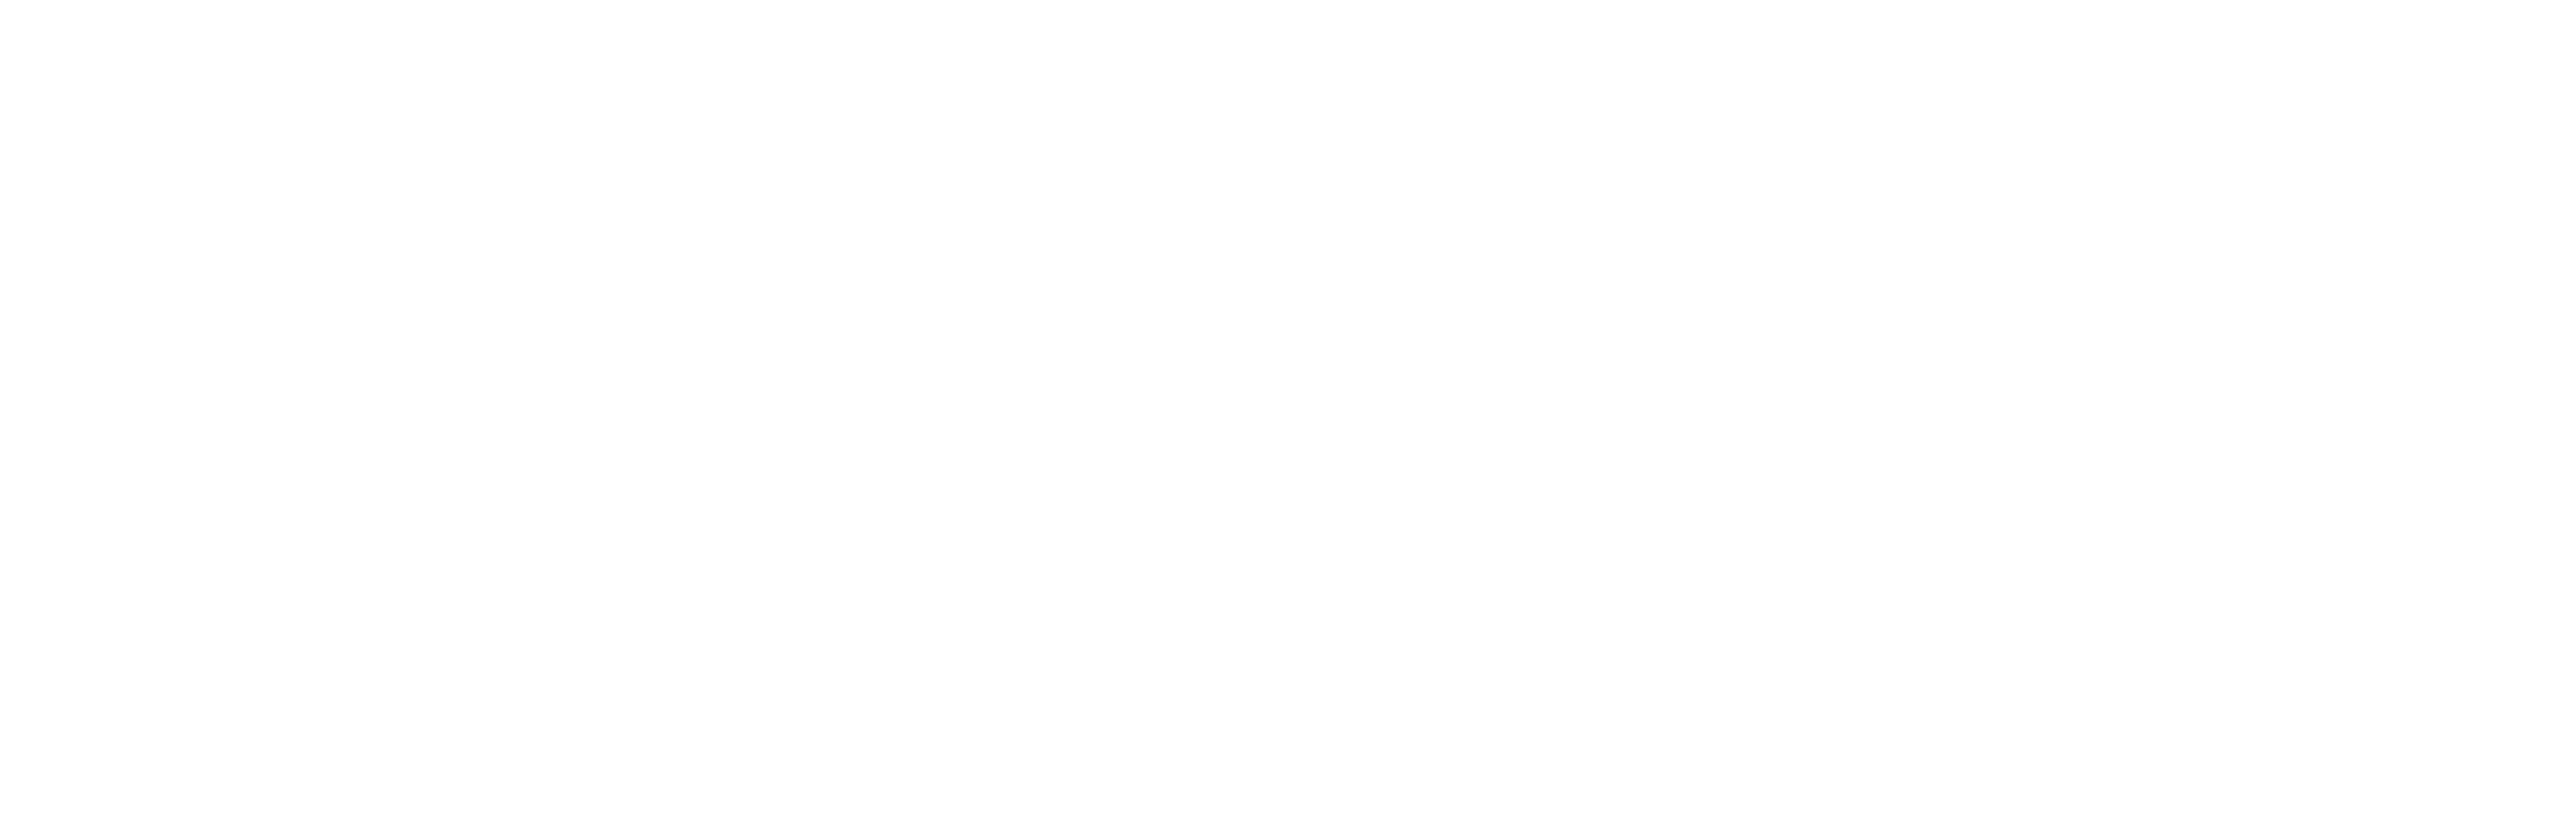 Torre Restaurant Group